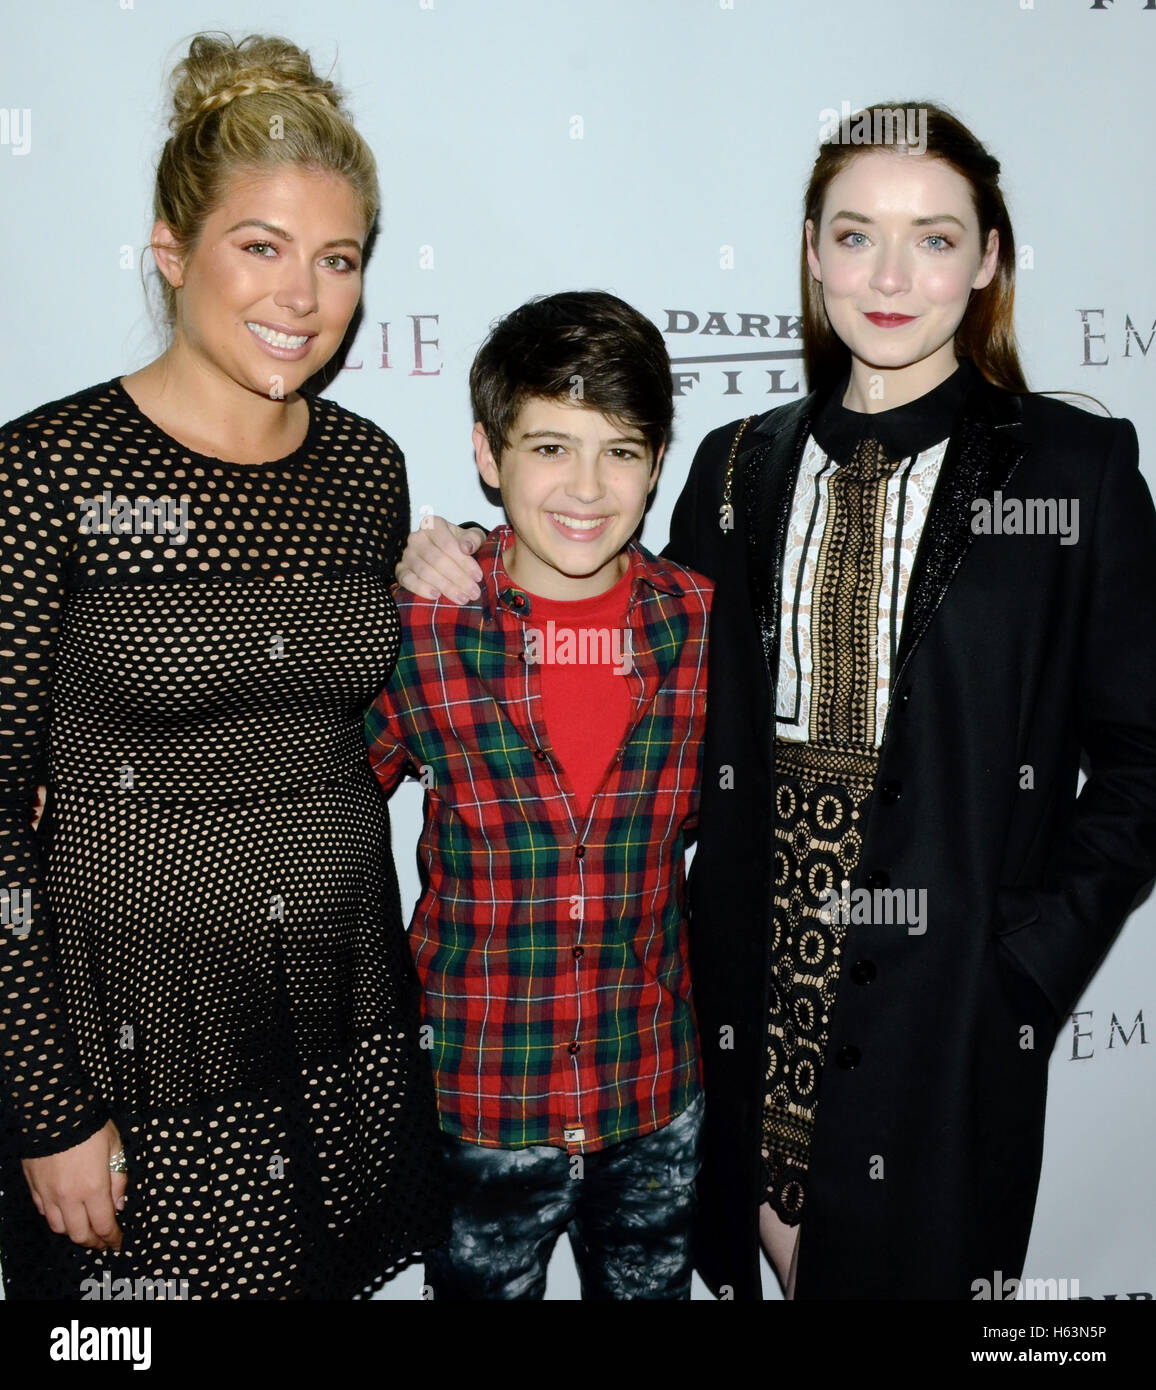 Elizabeth Jayne, Joshua Rush e Lizzie Friedman assiste la premiere di Dark Sky film' 'Emelie' a Arena Cinema Hollywood il 4 marzo 2016 in Hollywood, la California. Foto Stock